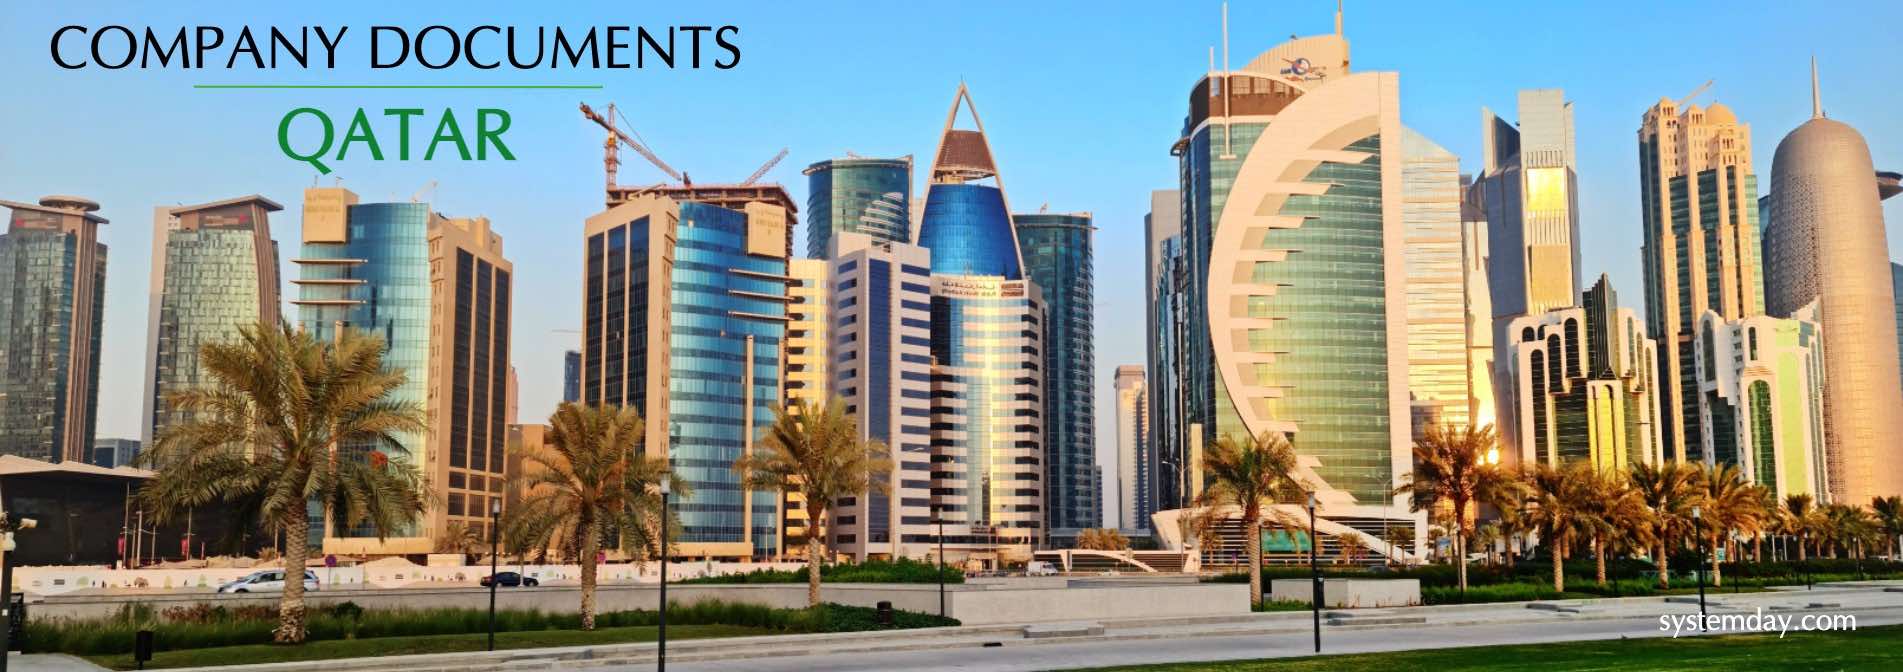 Qatar Company Documents